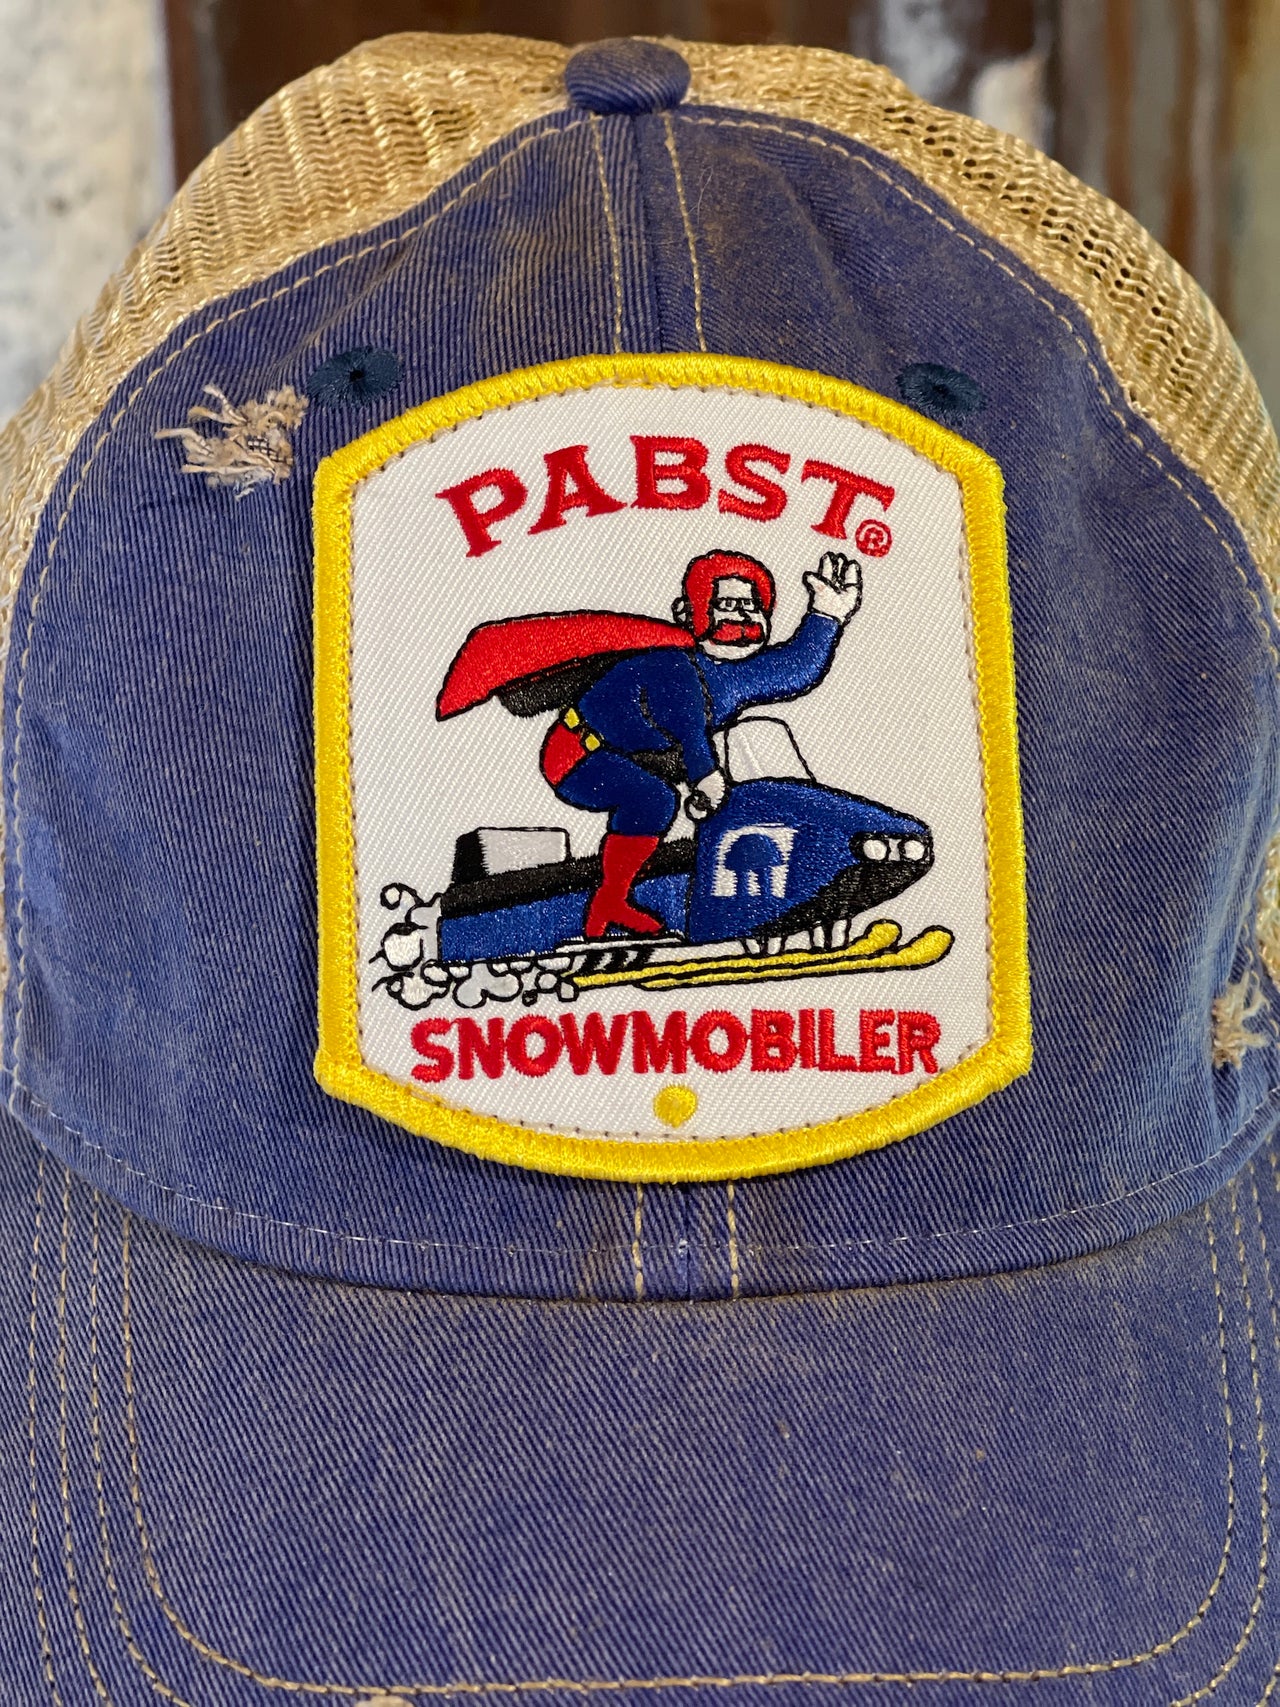 Pabst Beer Baseball Cap